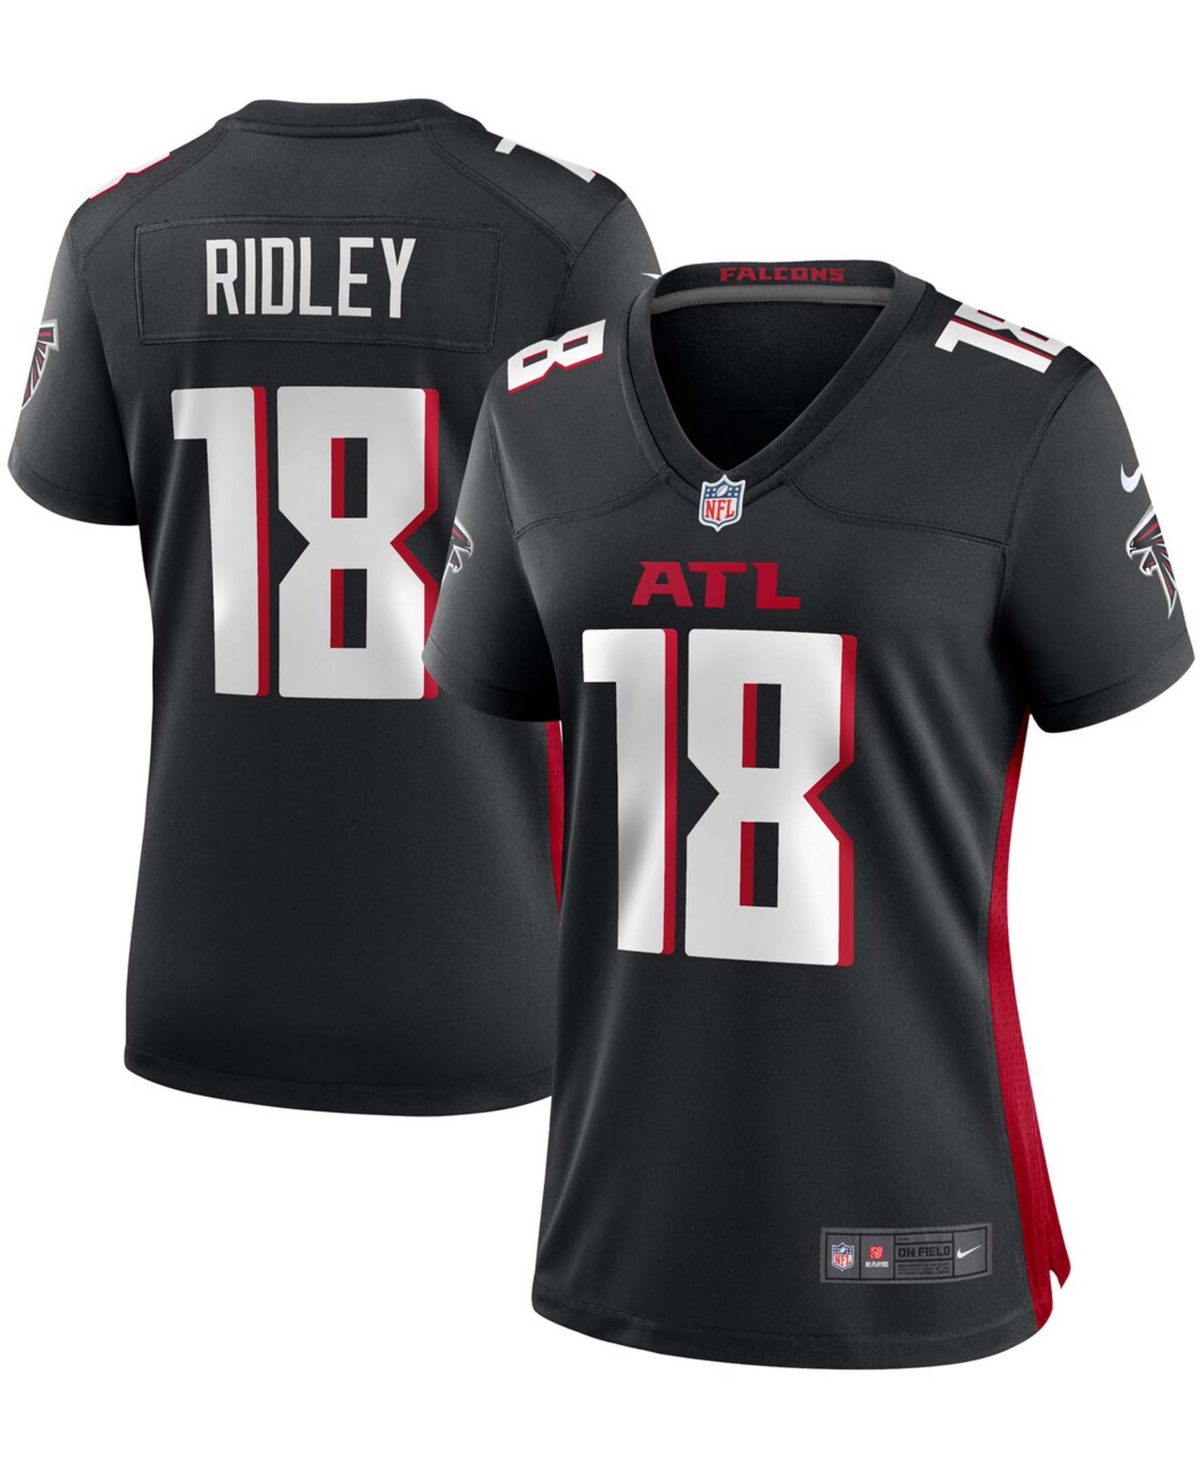 UPC 194534356679 product image for Nike Women's Calvin Ridley Atlanta Falcons Game Player Jersey | upcitemdb.com